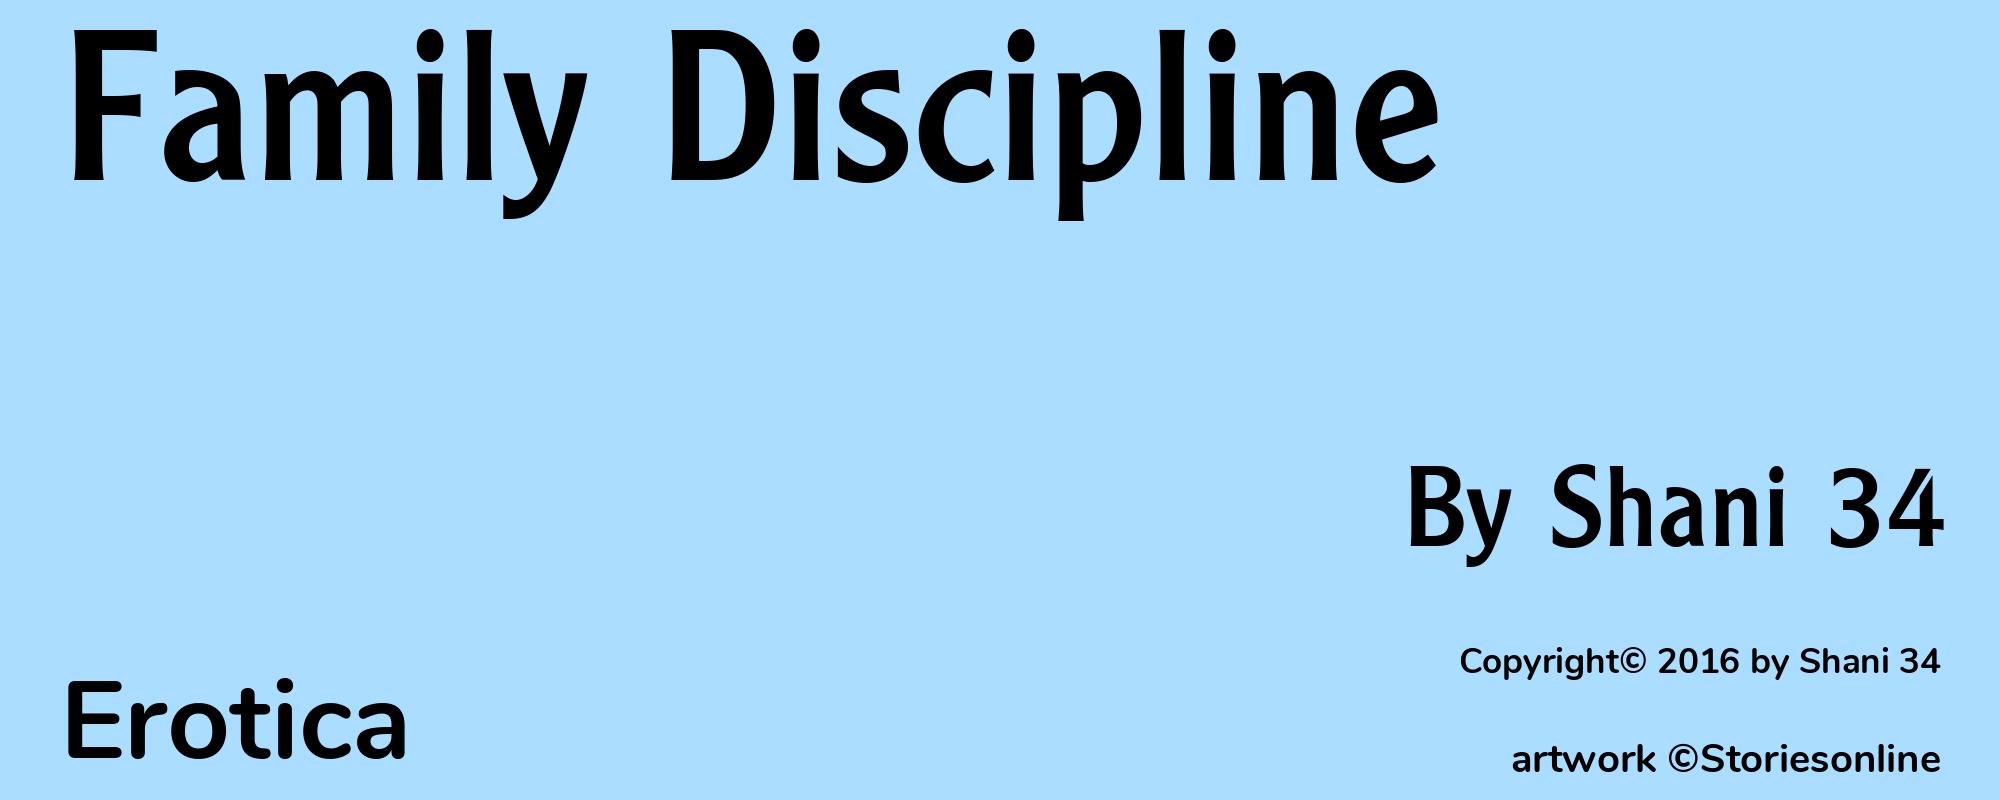 Family Discipline - Cover